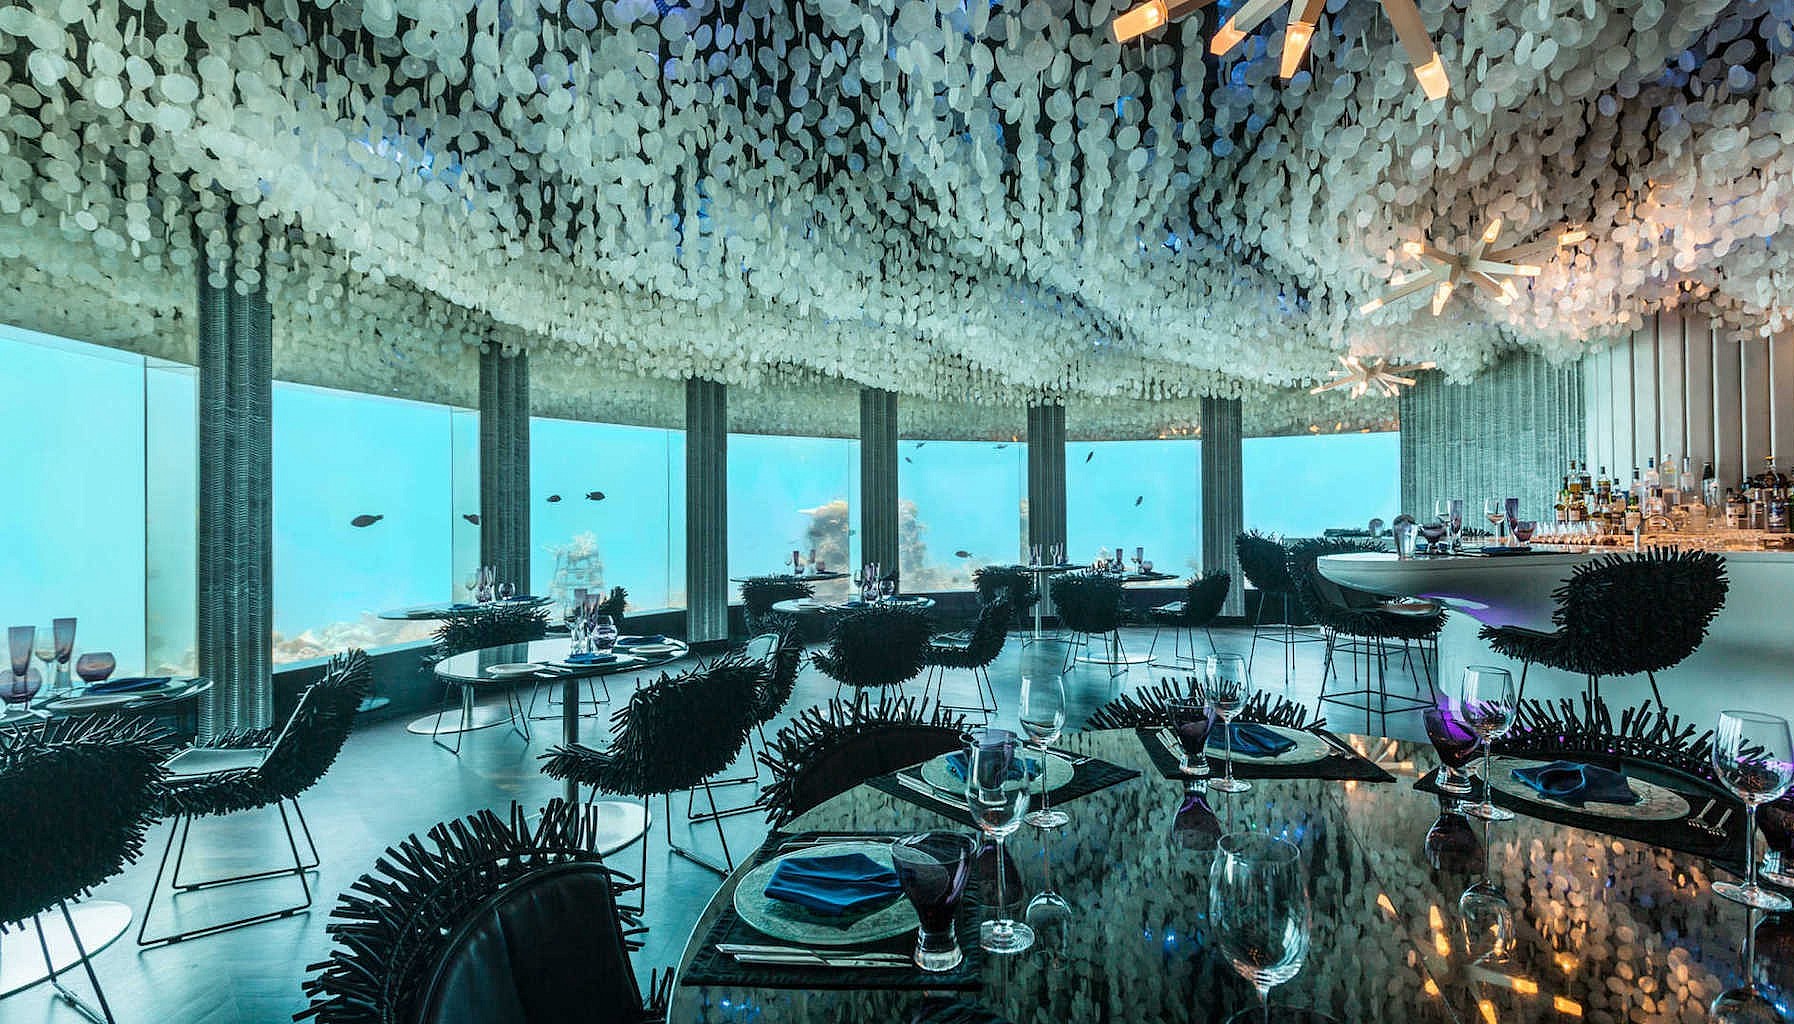 Six amazing underwater hotel experiences | RobbReport Malaysia